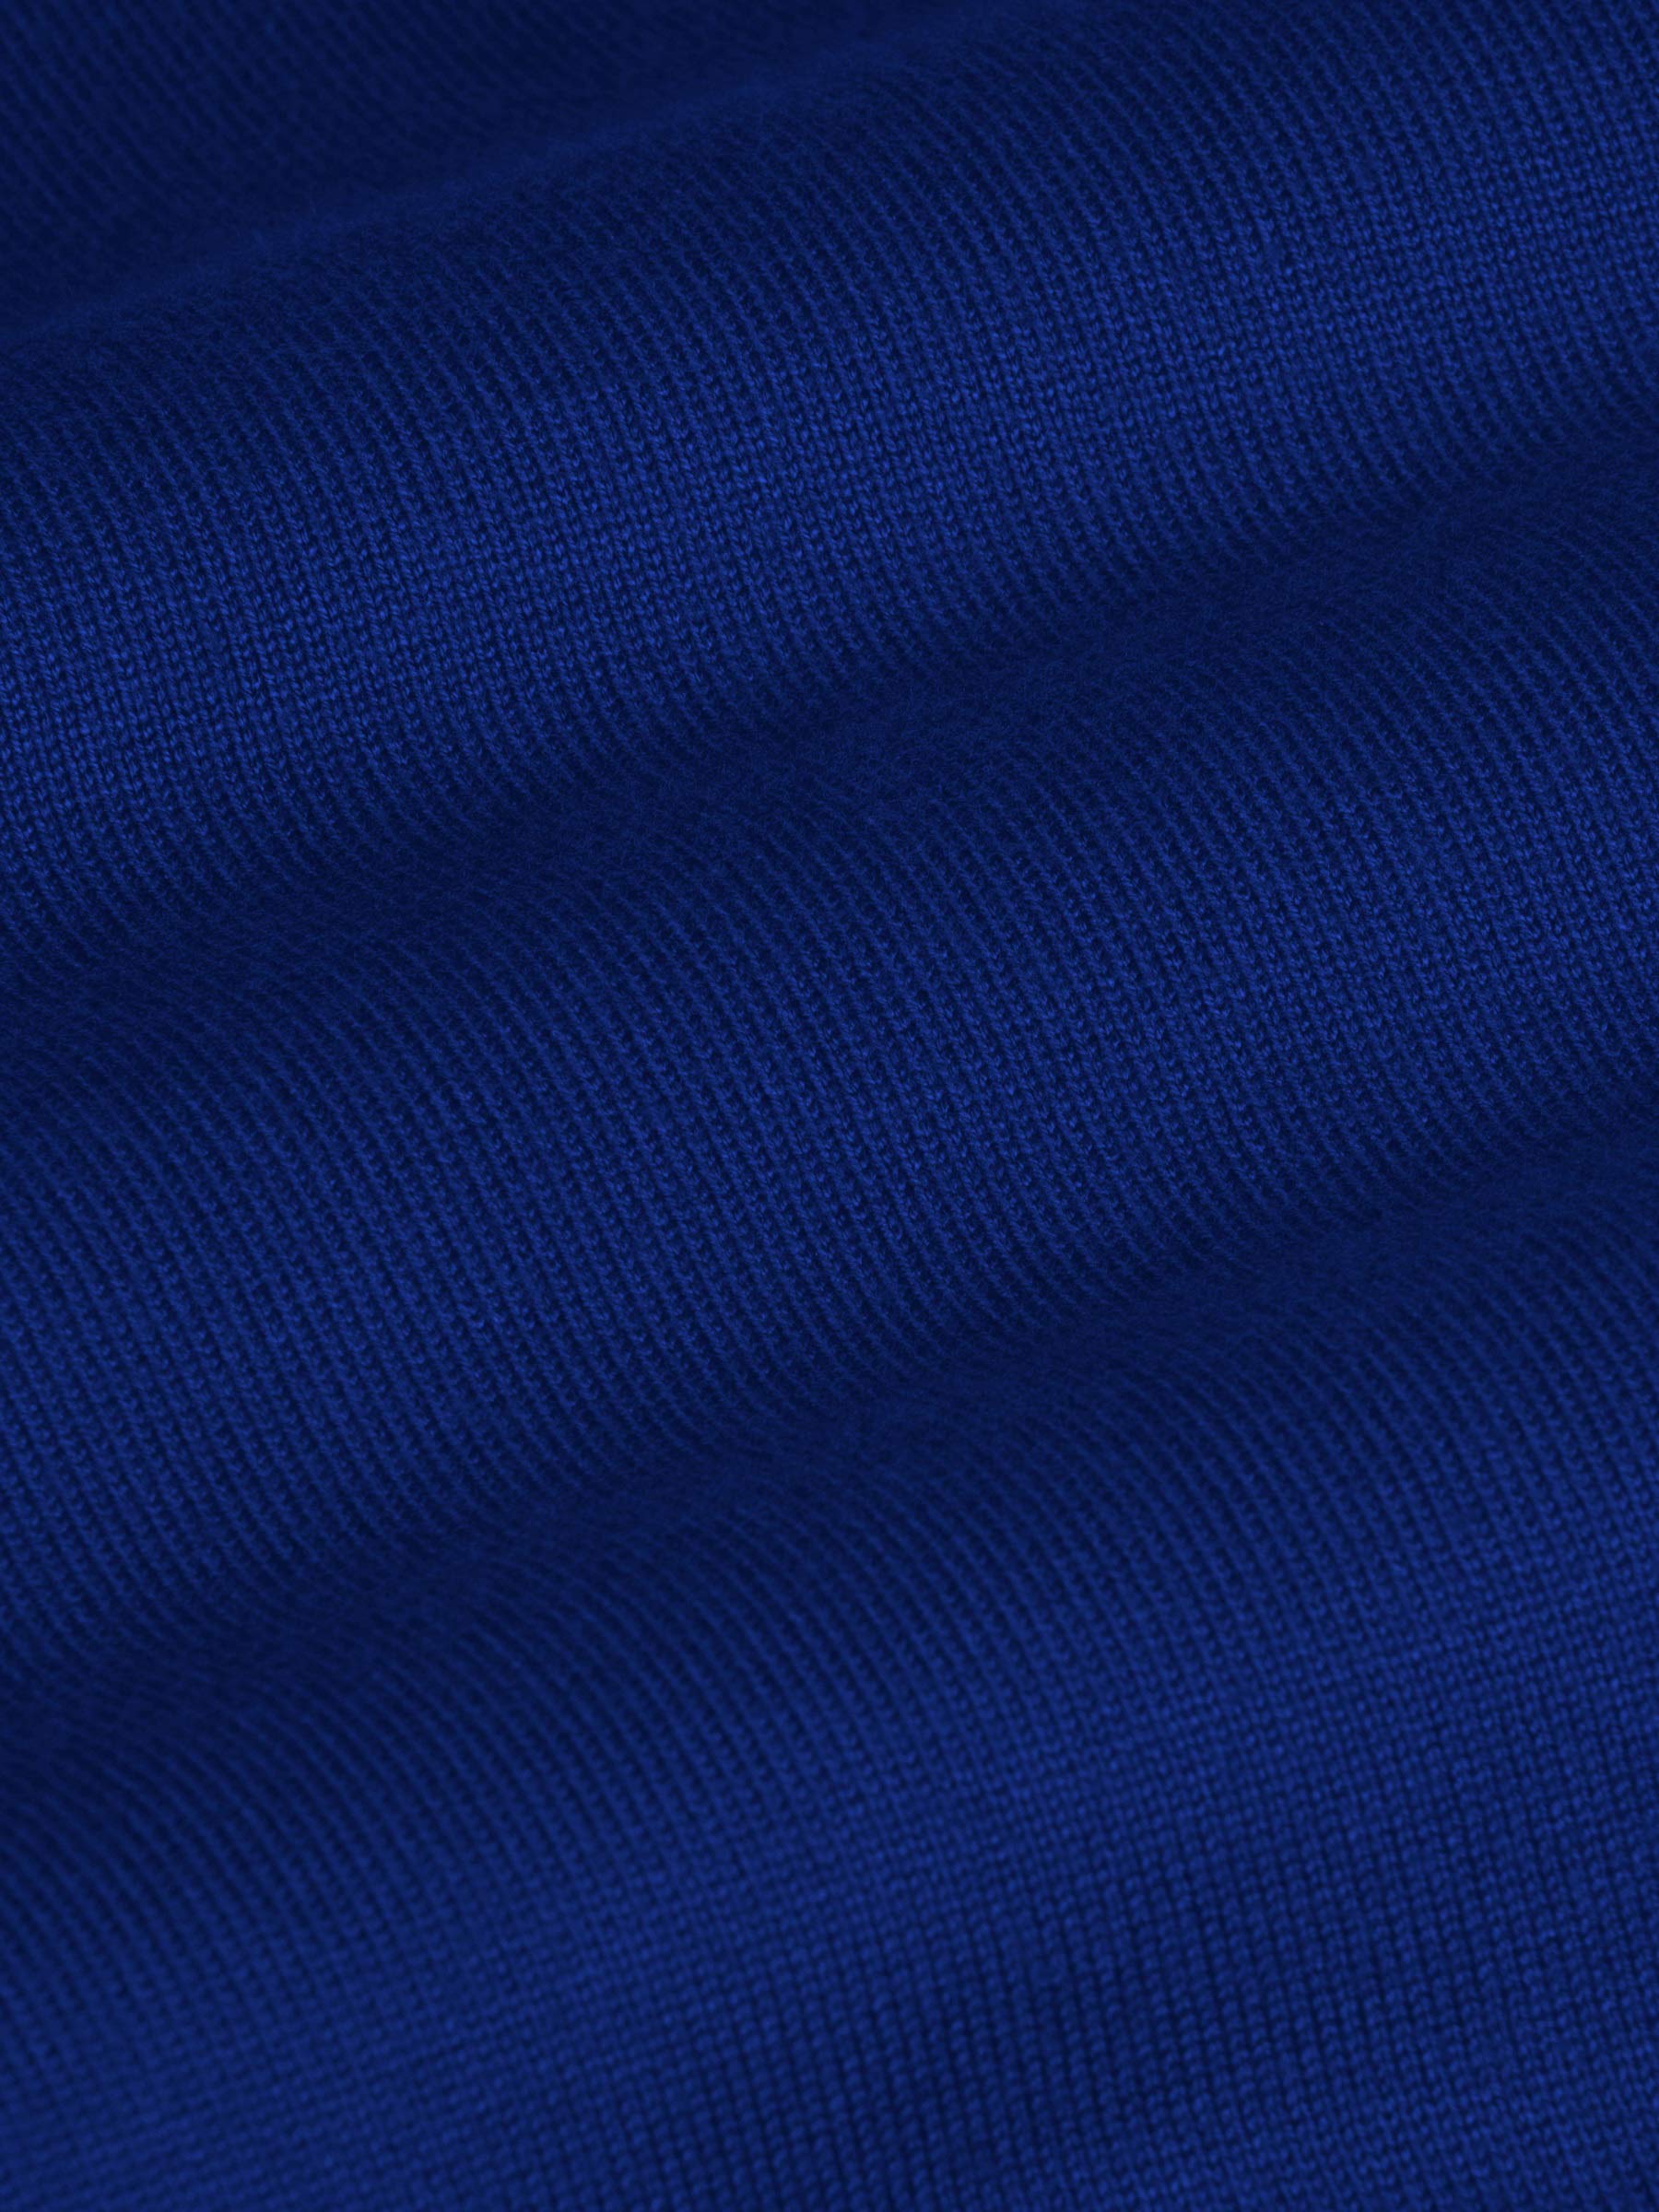 Siena Round-Necked Royal Blue Sweater 